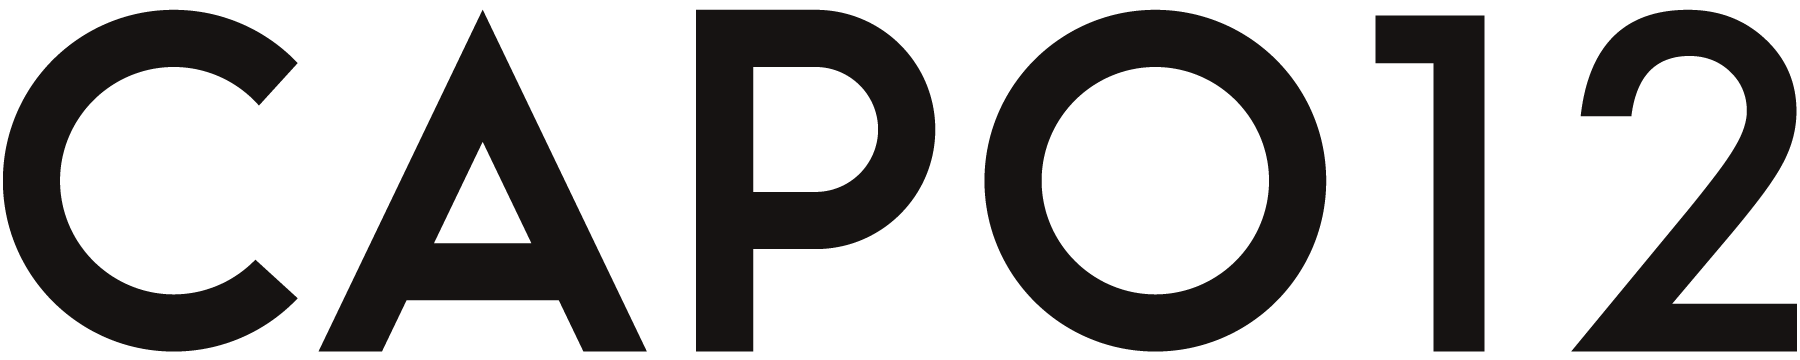 https://www.capo12.com/wp-content/uploads/2018/07/logo_black.png